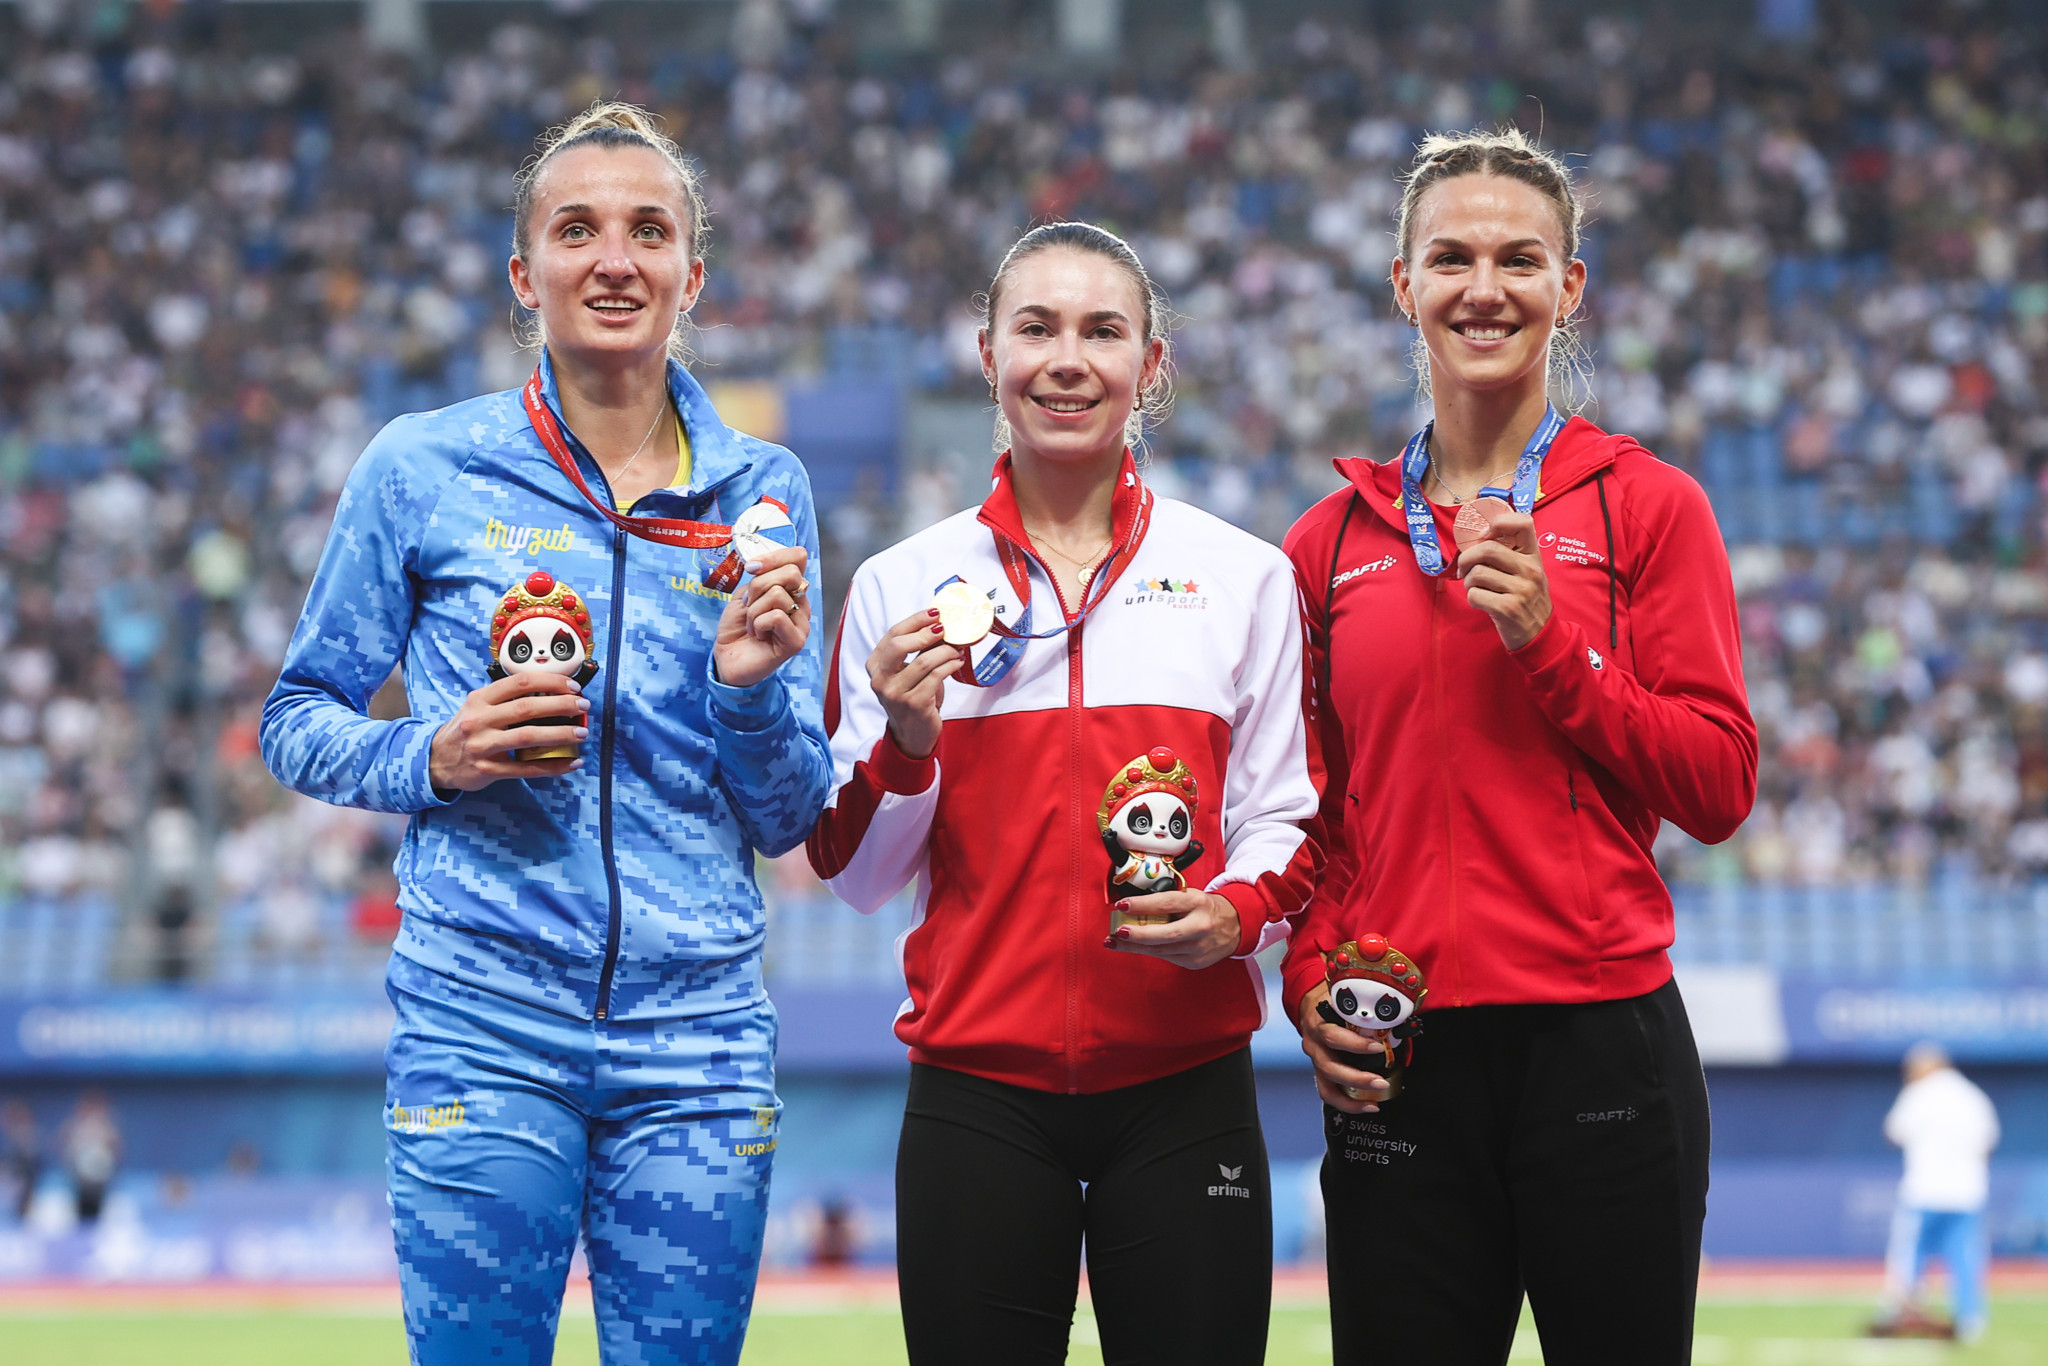 Isabel Cristina of Austria won the women's heptathlon gold medal ©Chengdu 2021